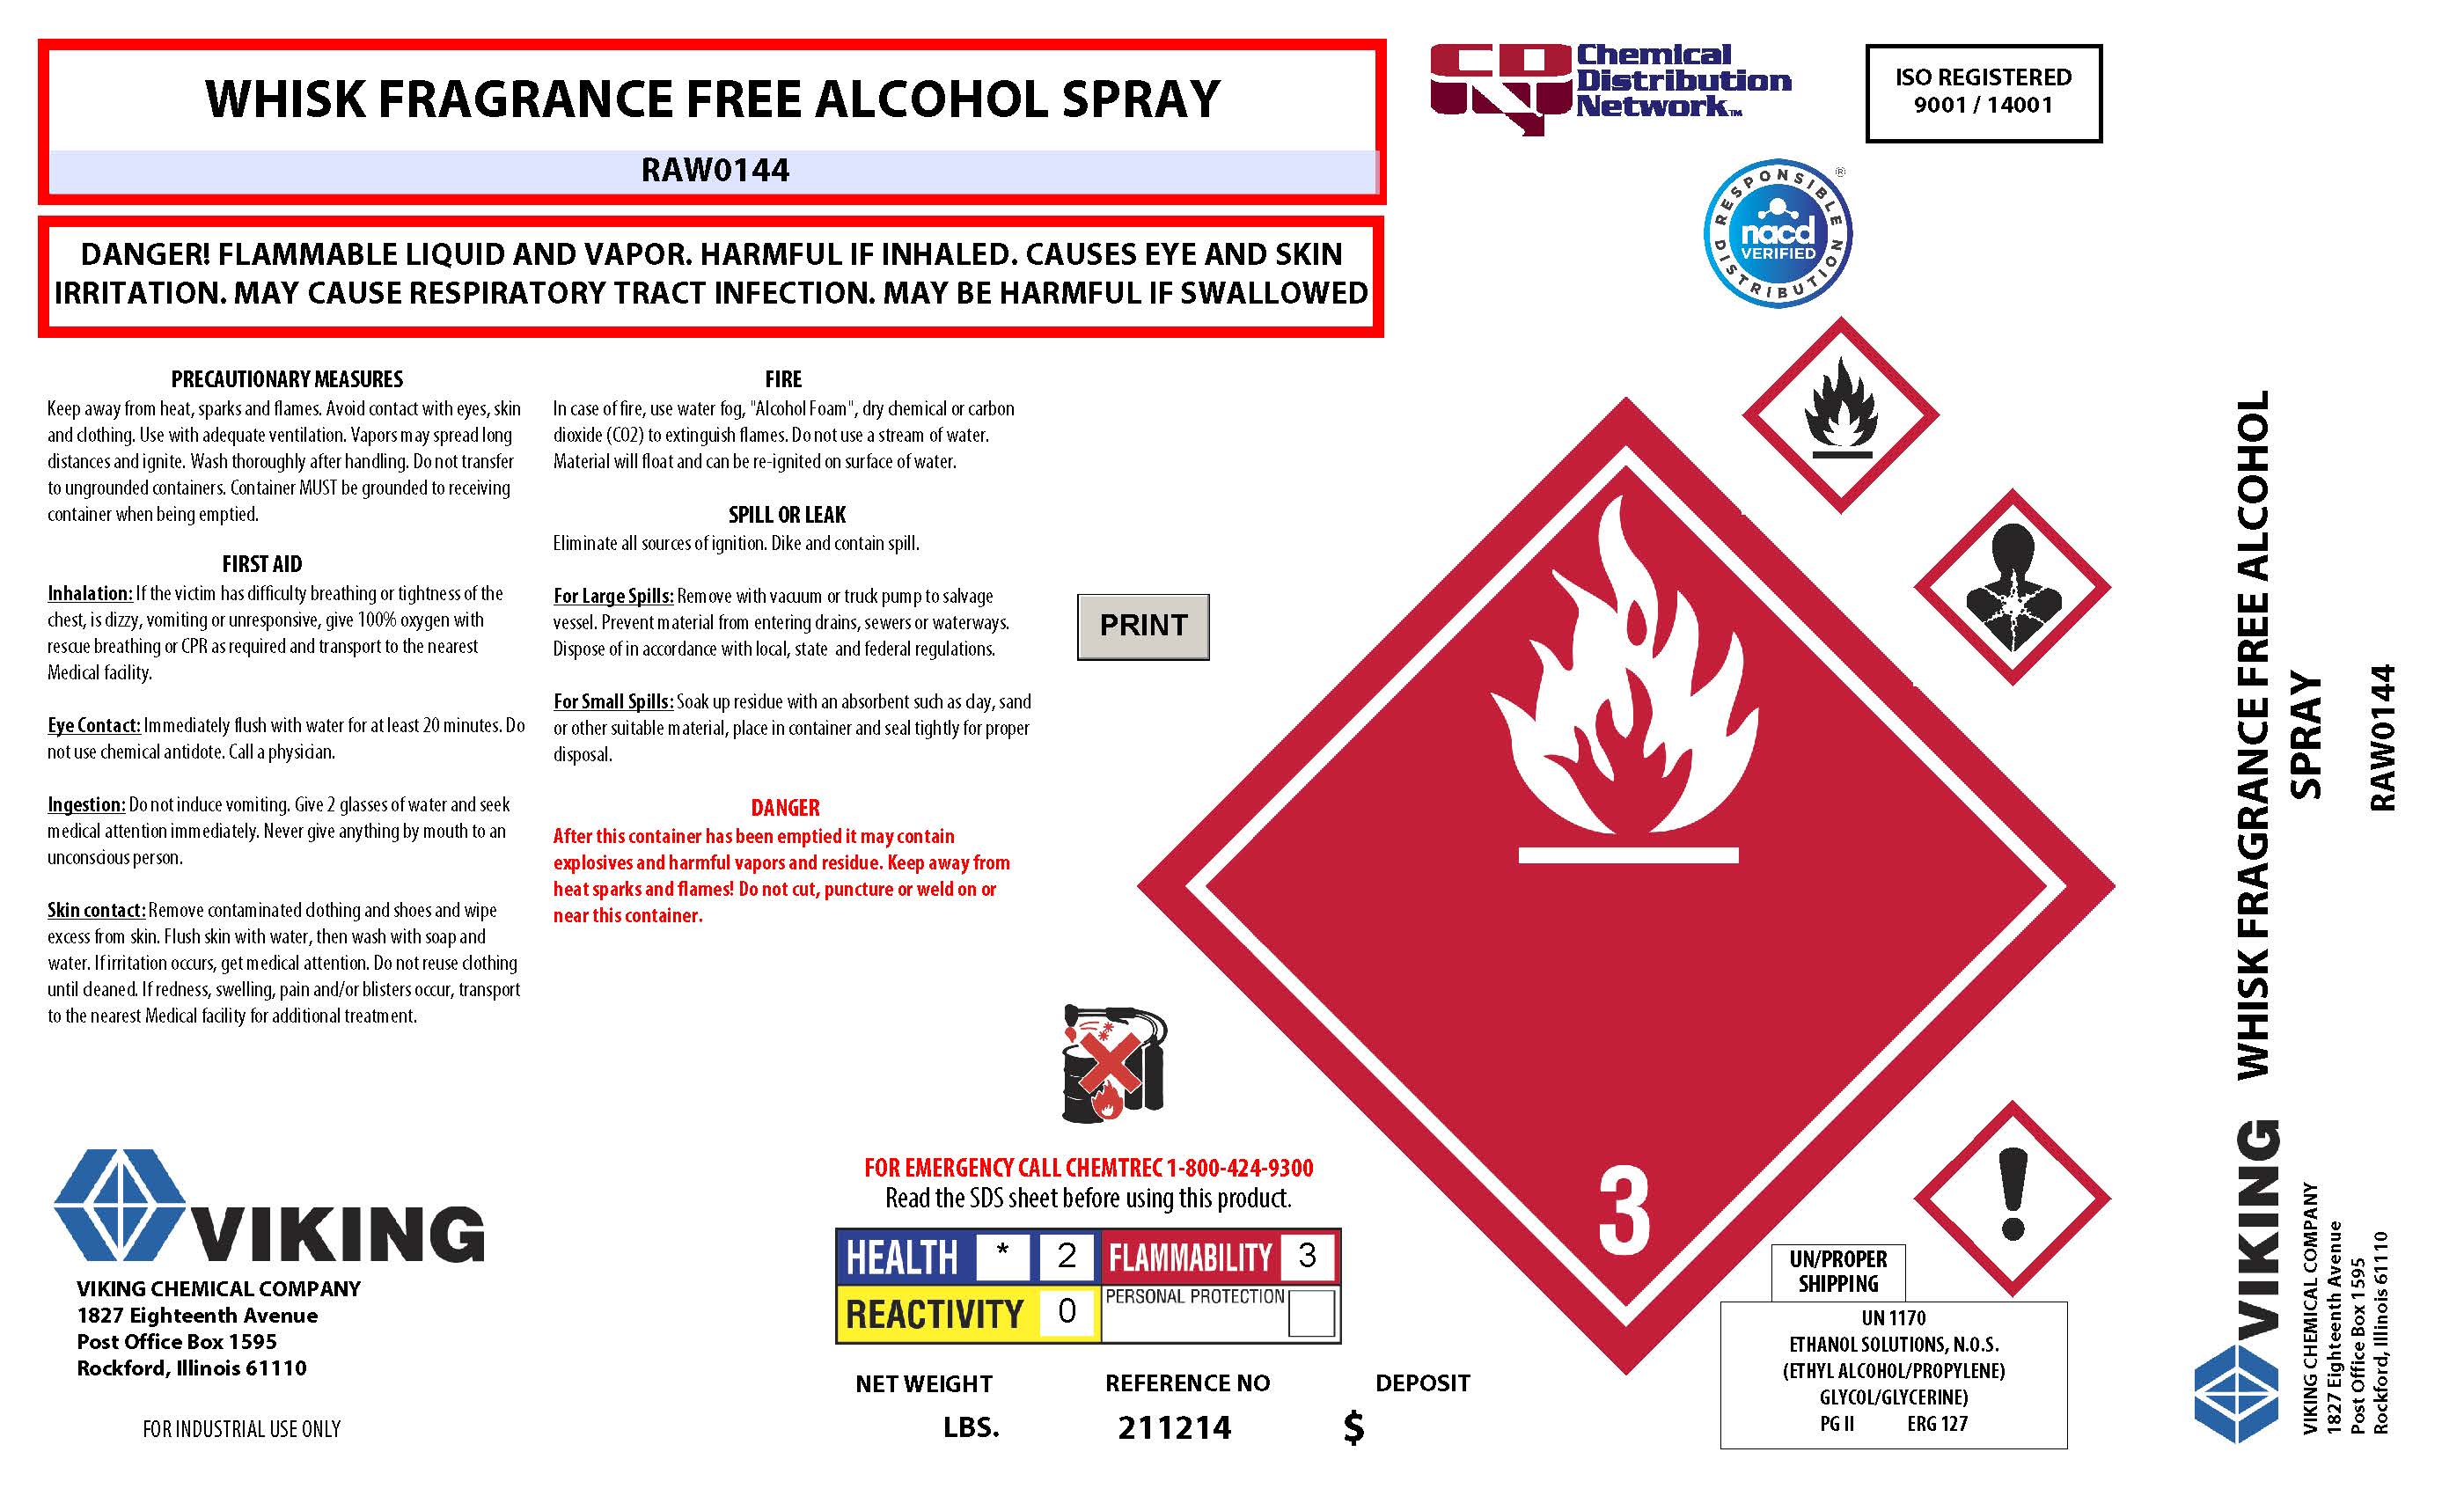 Whisk Fragrance Free Alcohol Spray